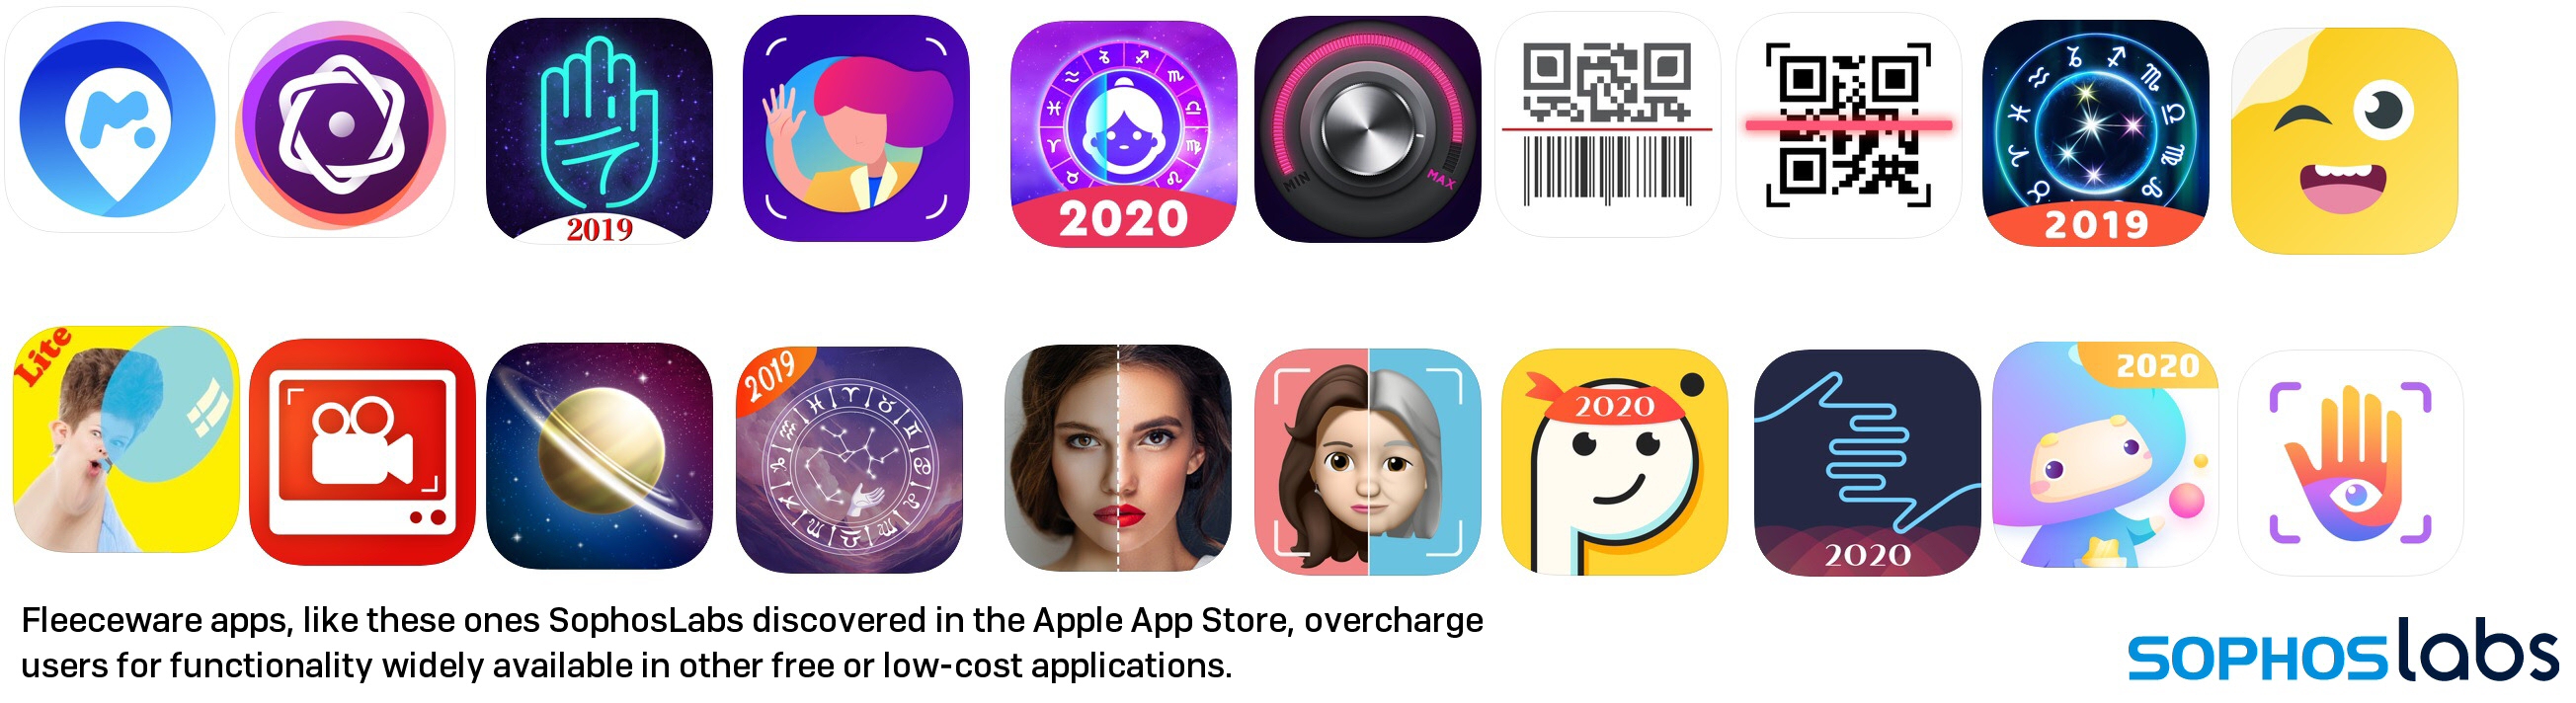 SophosLabs entlarvt über 30 Fleeceware-Apps für iPhones